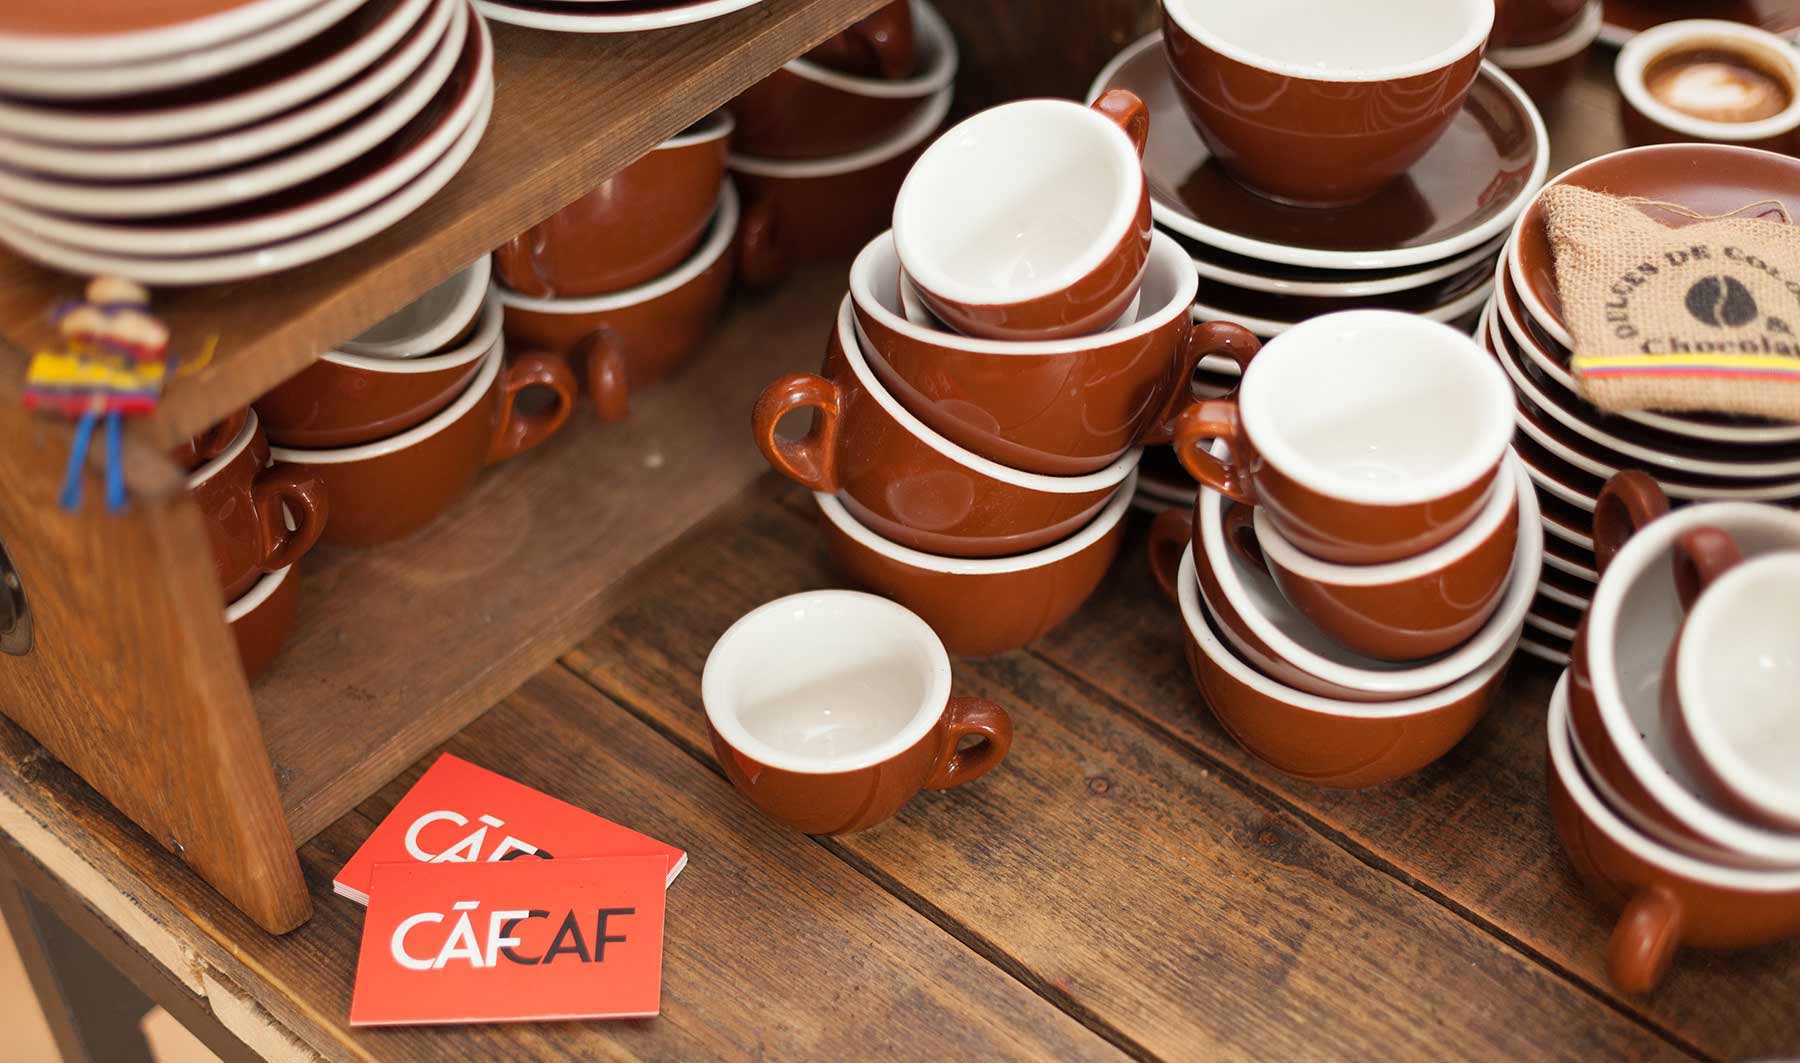 ACF Tassen: Designertassen aus Italien. CafCaf.de – Kaffee & Blog, Kaffeeblog